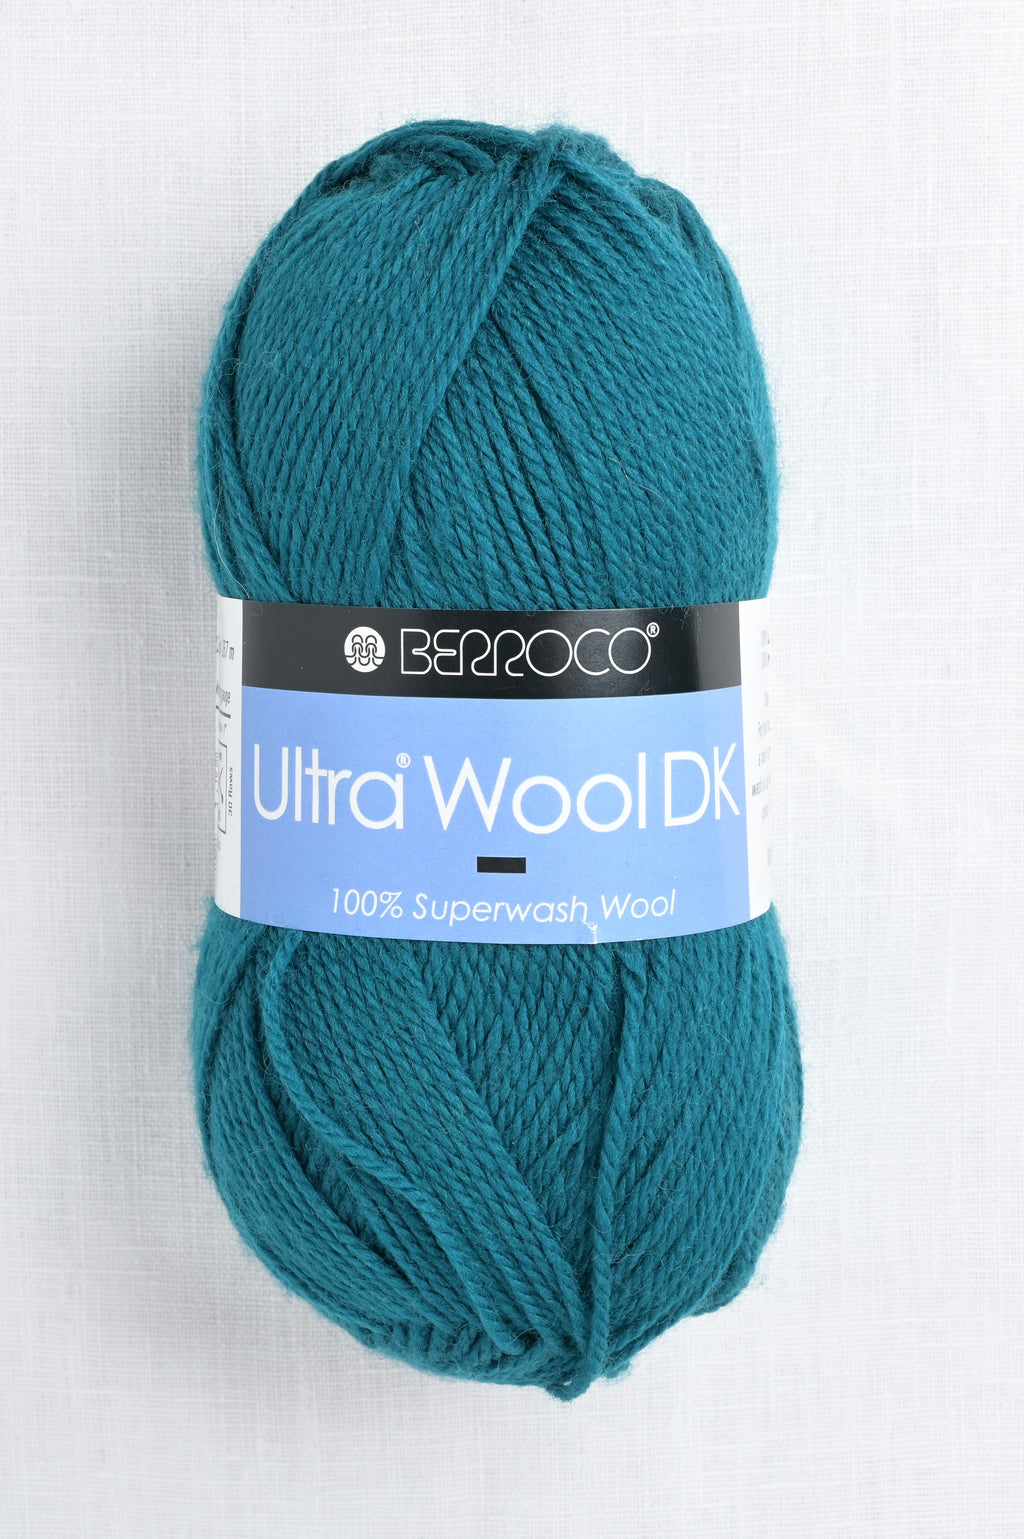 Berroco Ultra Company Kale DK 8361 – Wool Wool and